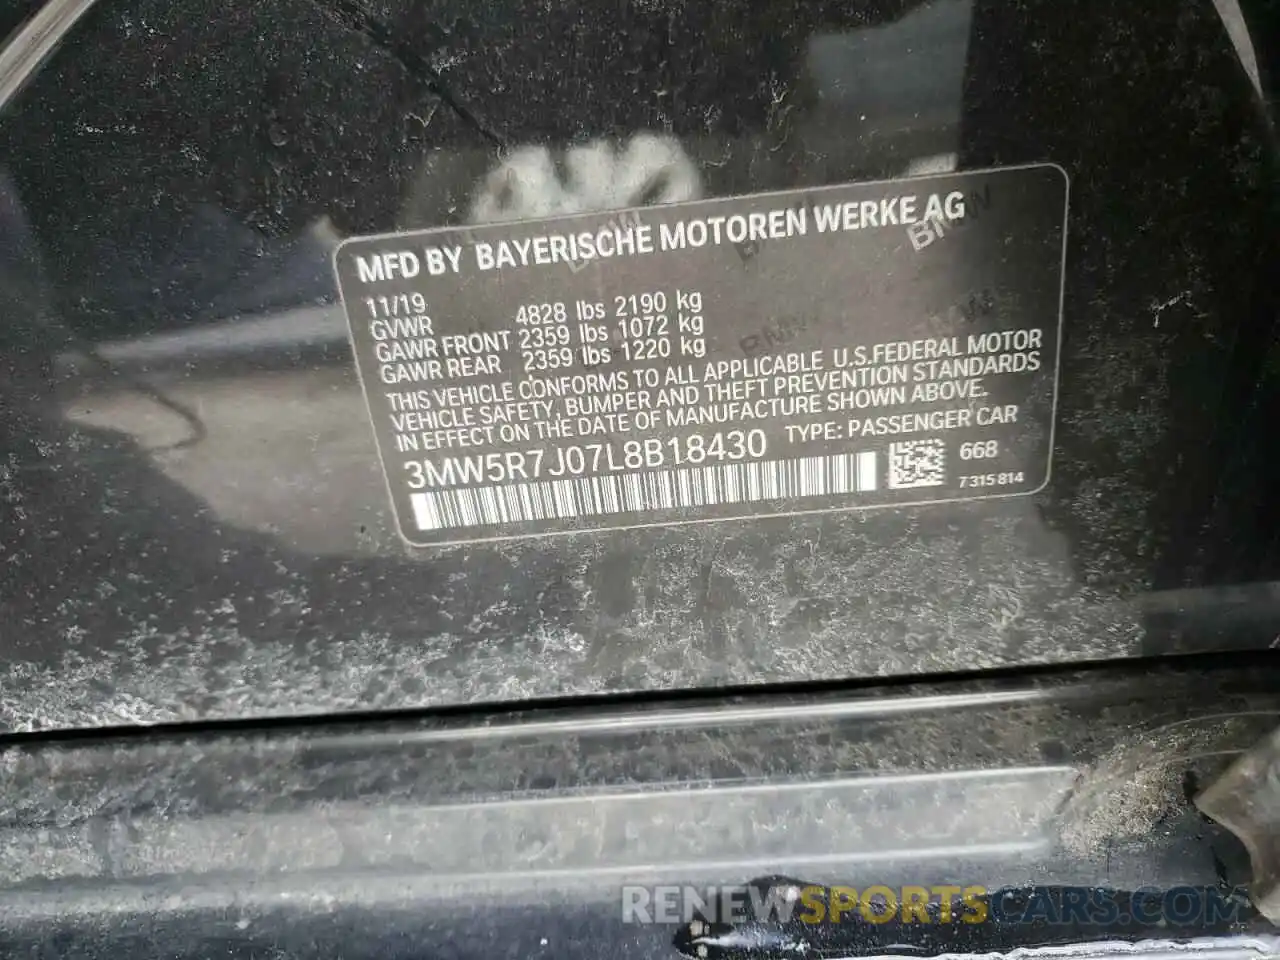 12 Photograph of a damaged car 3MW5R7J07L8B18430 BMW 3 SERIES 2020